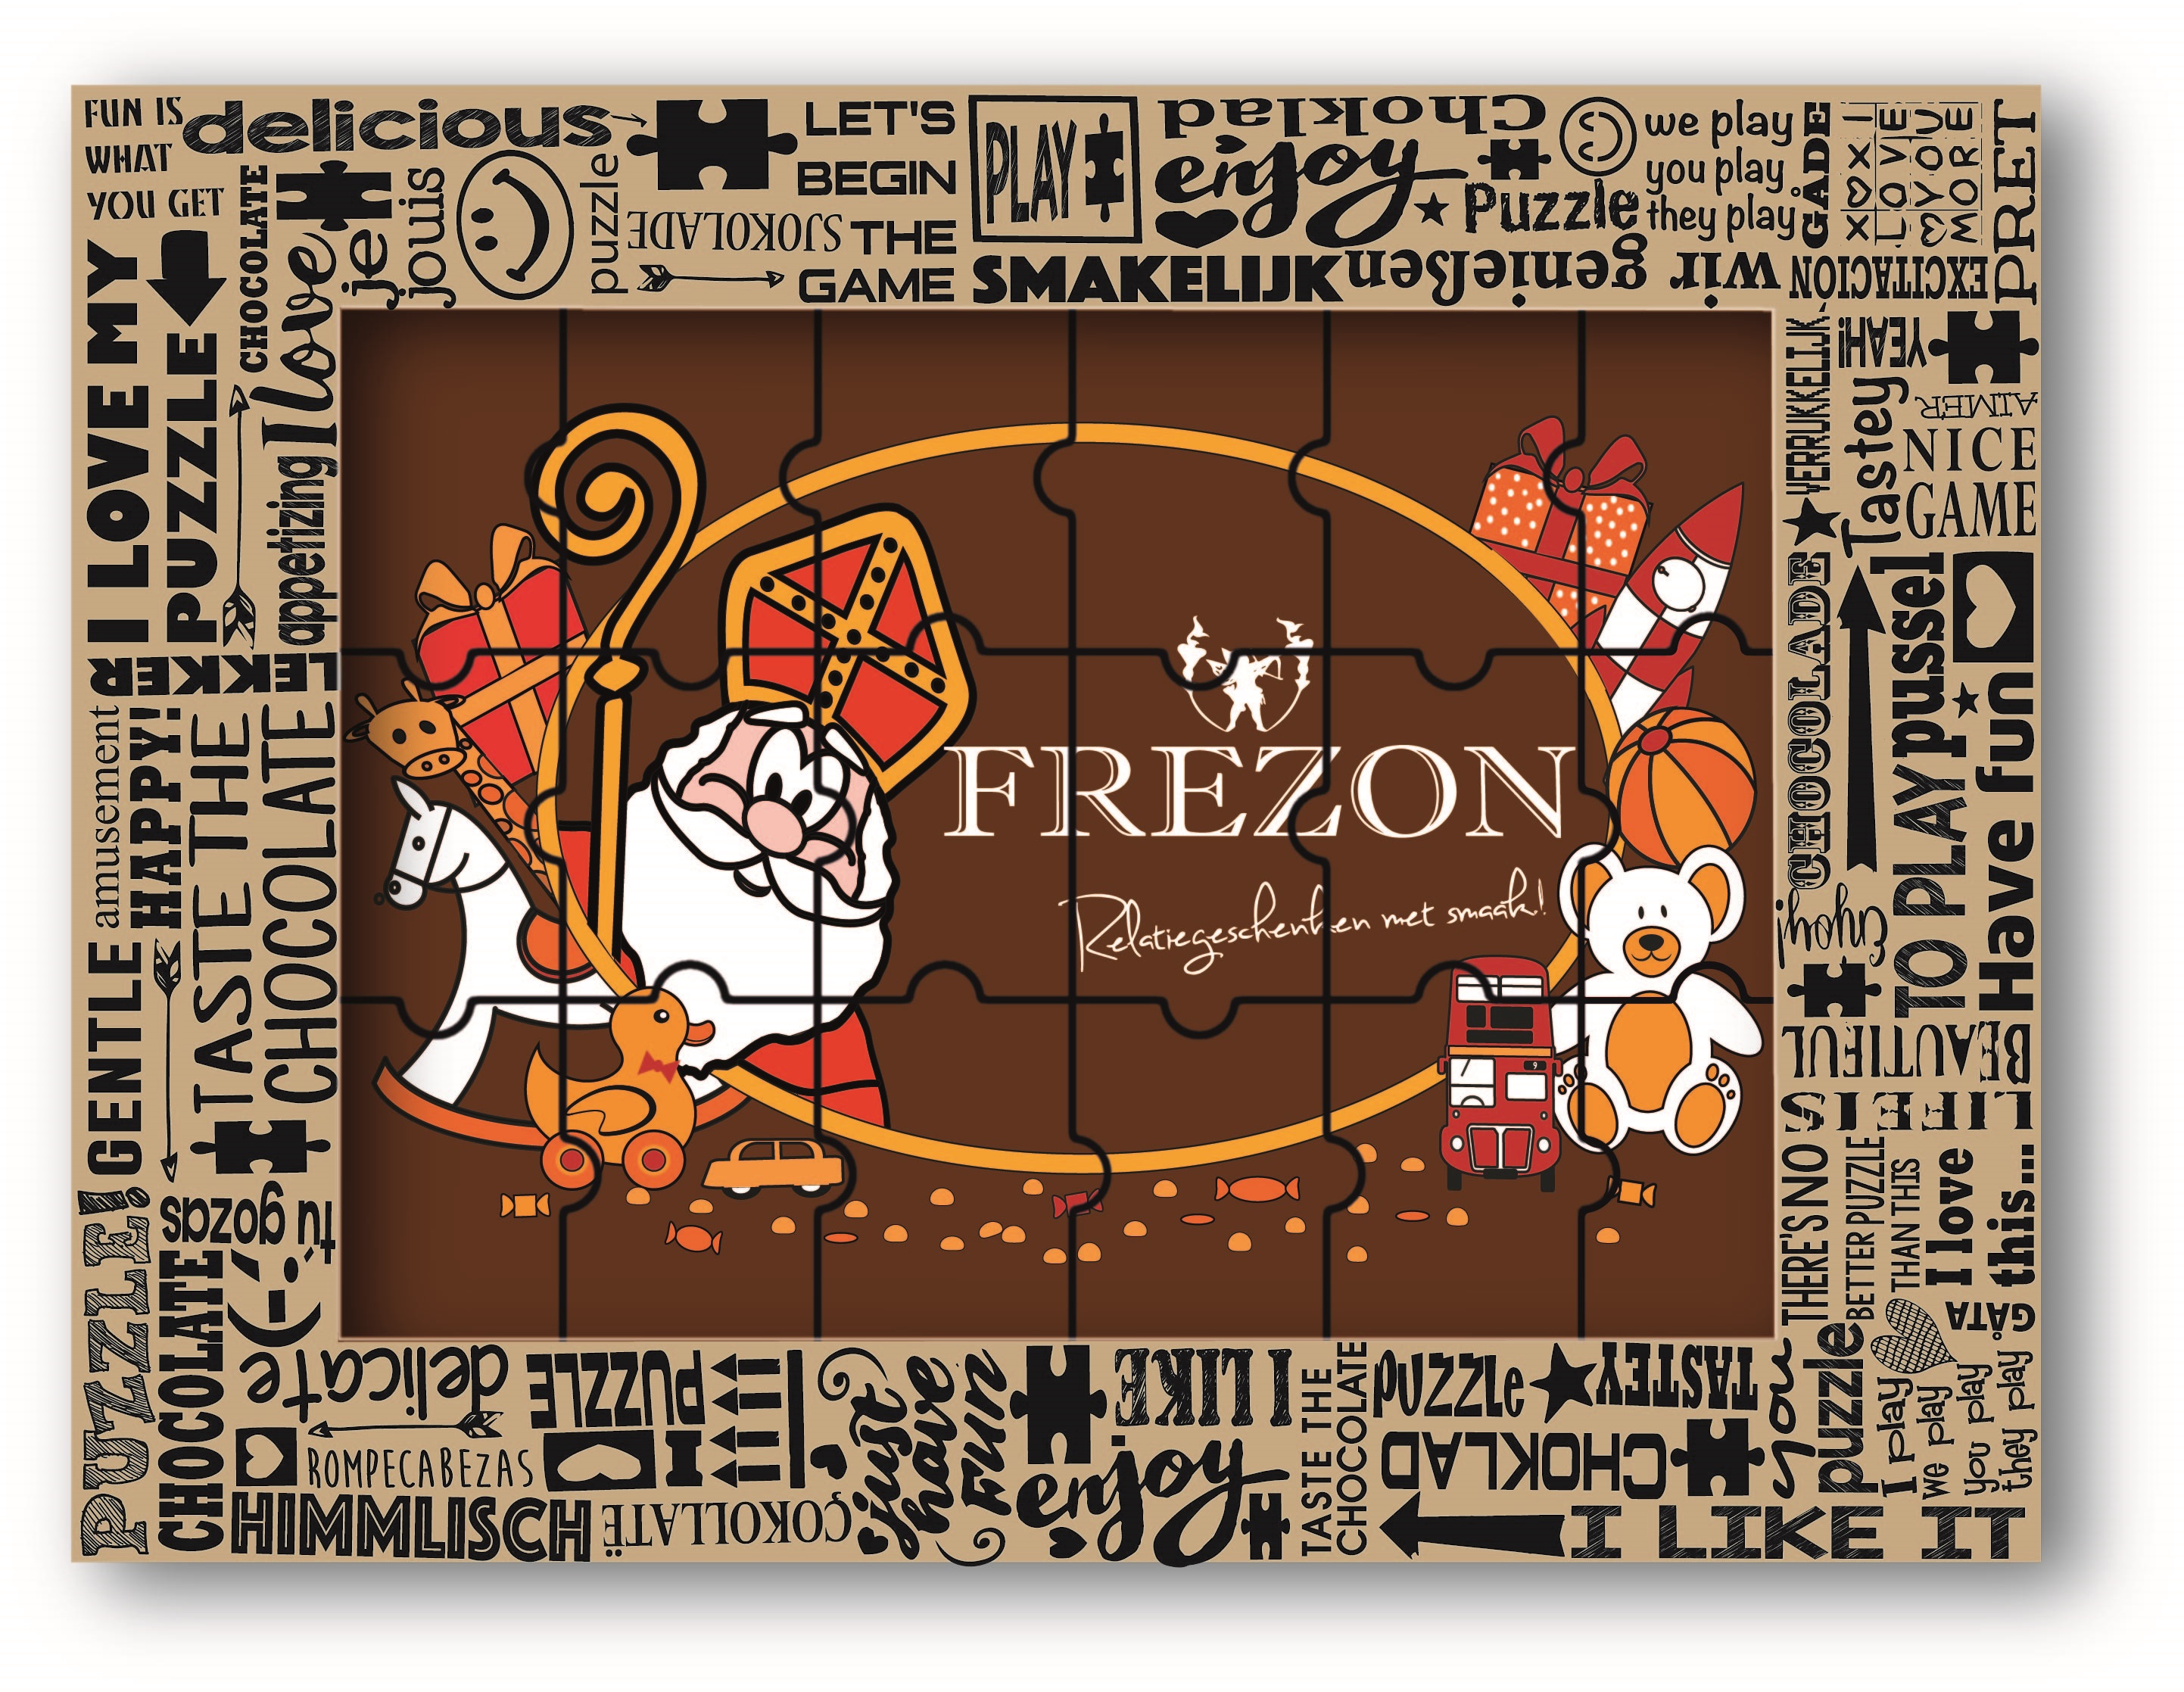 https://frezon.nl/media/catalog/product/f/r/frezon_chocolade.sint_puzzel_eigenlogo.jpg